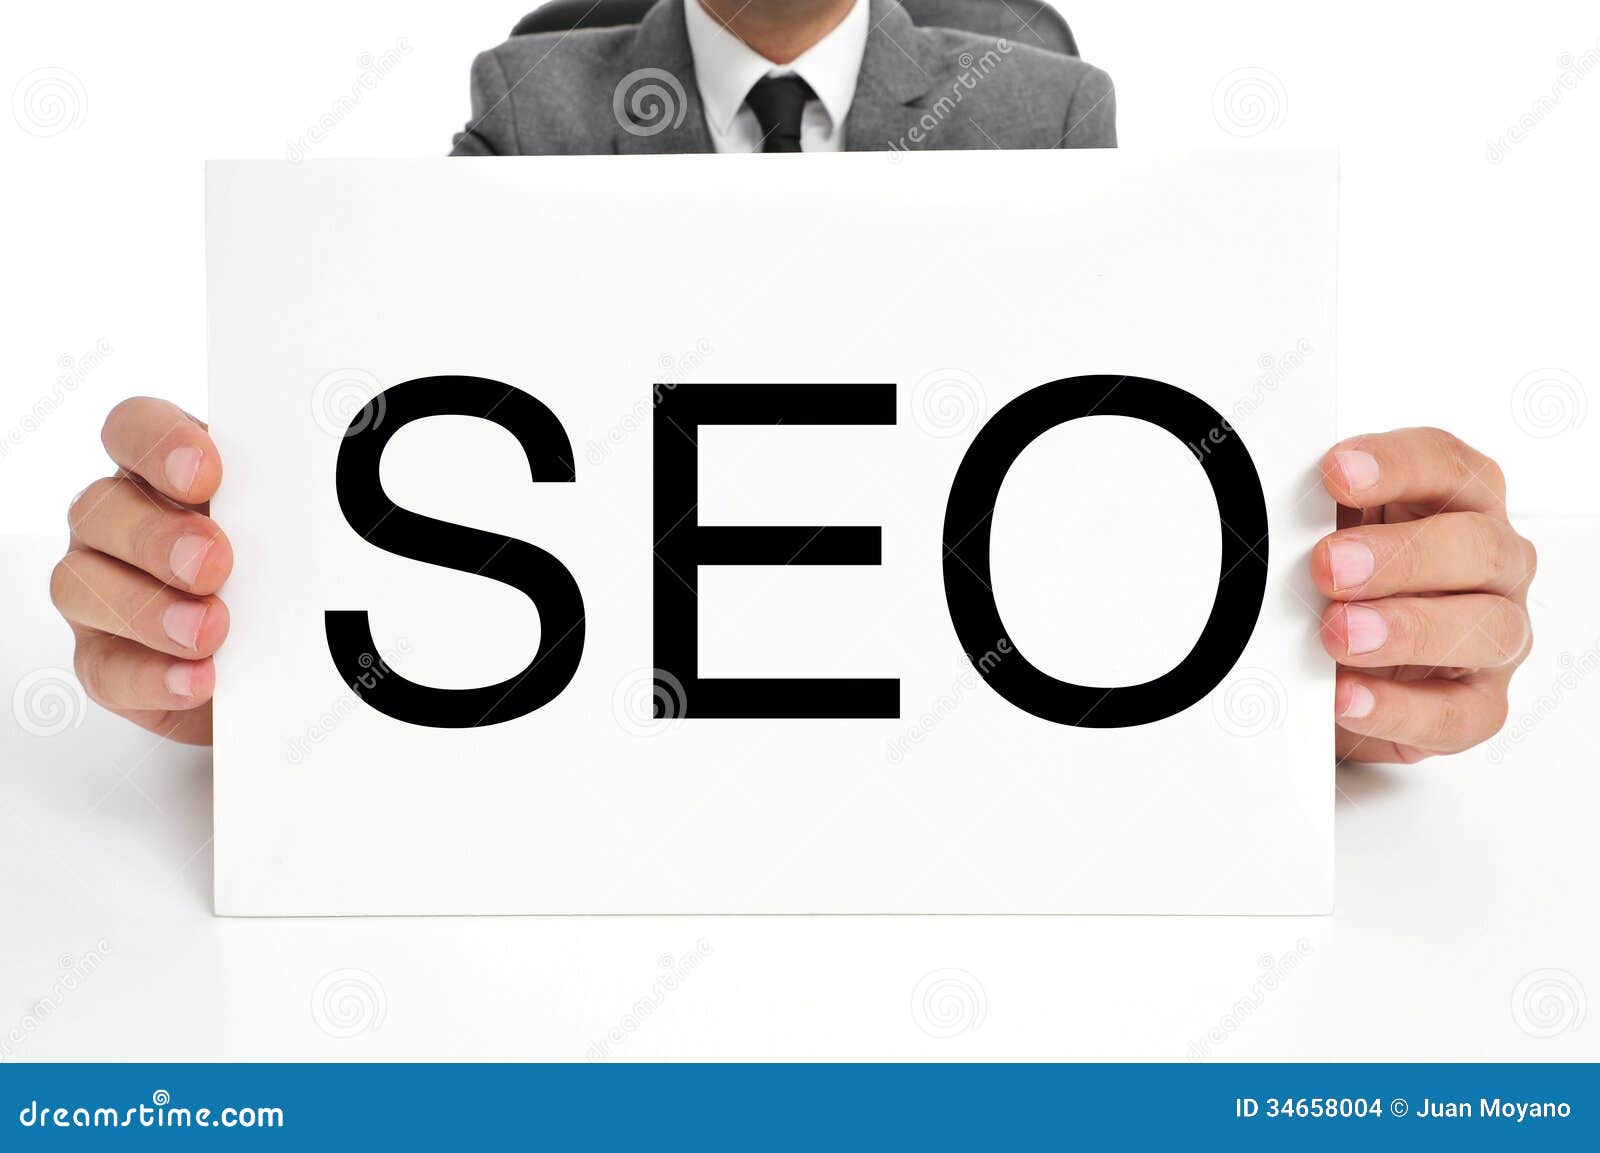 SEO, Acronym For Search Engine Optimization Stock Photo - Image of ...